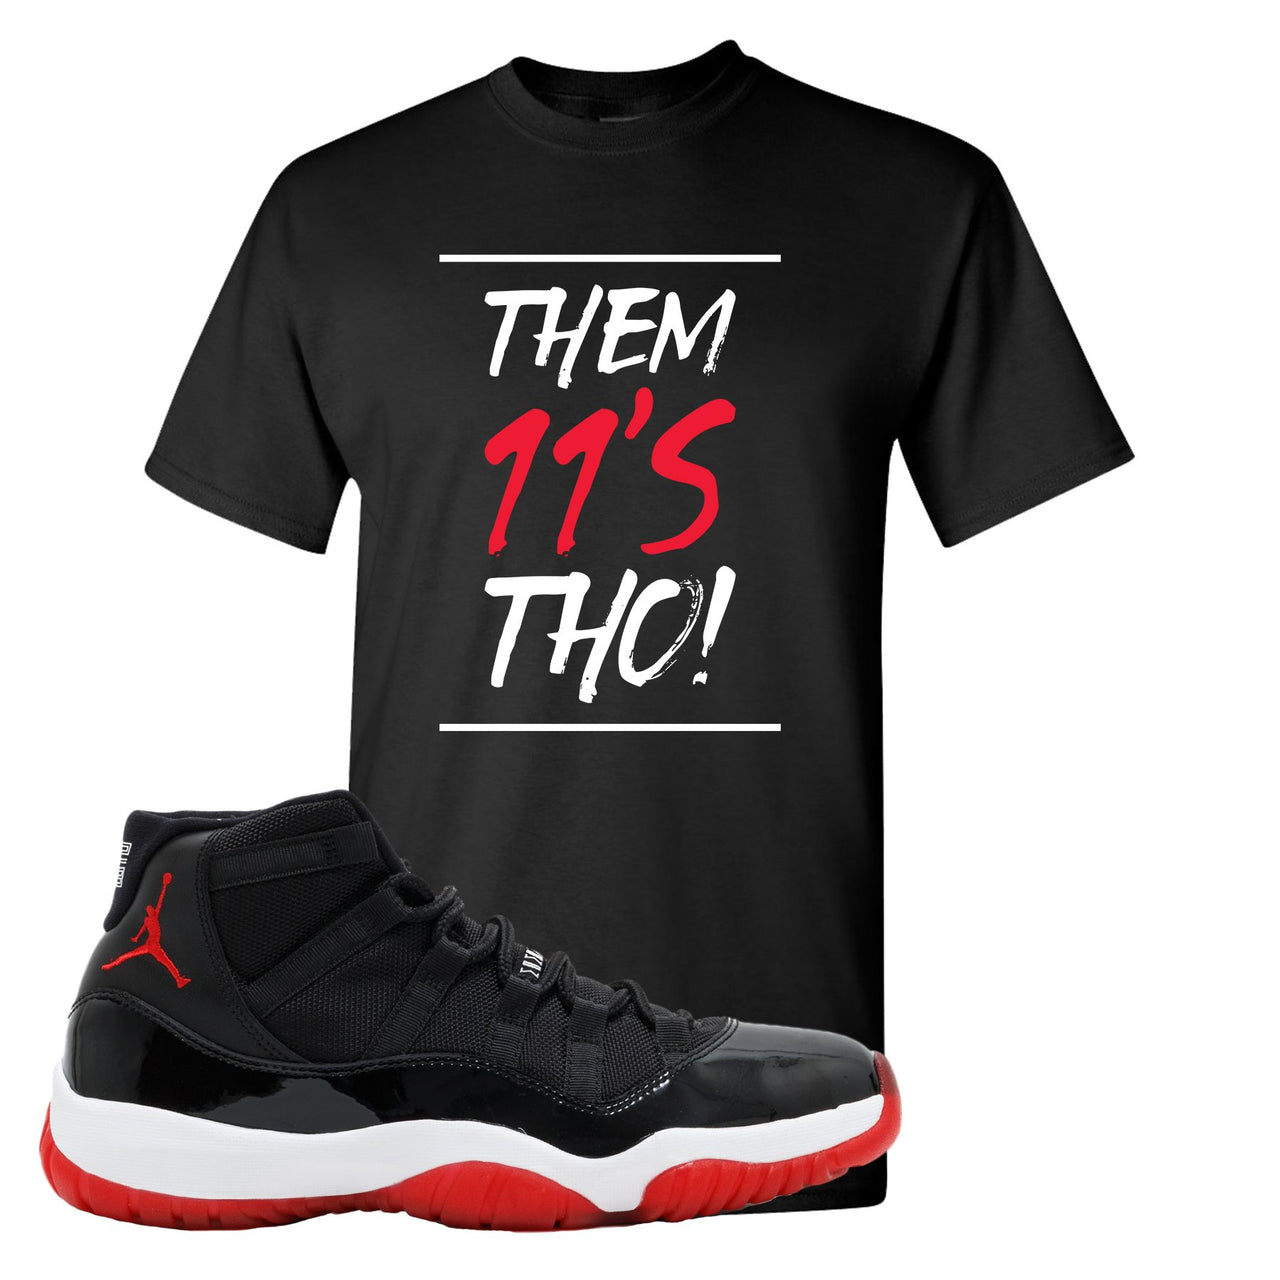 Jordan 11 Bred Them 11s Tho! Black Sneaker Hook Up T-Shirt